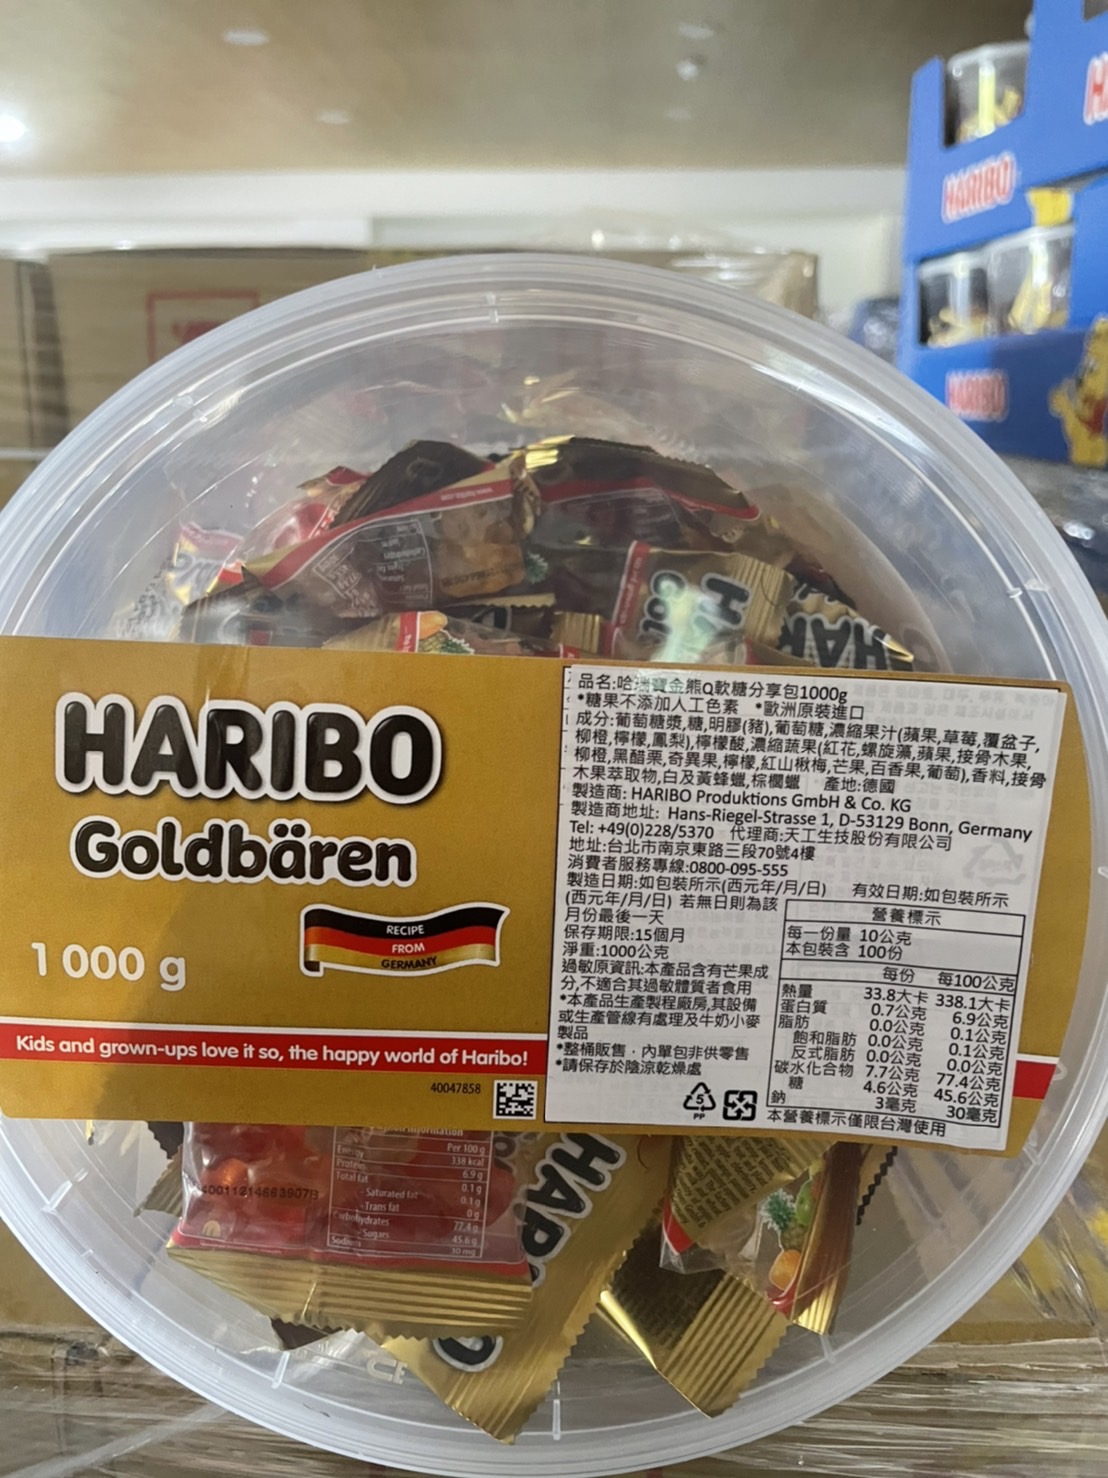 【HARIBO 哈瑞寶】金熊Q軟糖(1kg/罐) 小包裝派對分享包